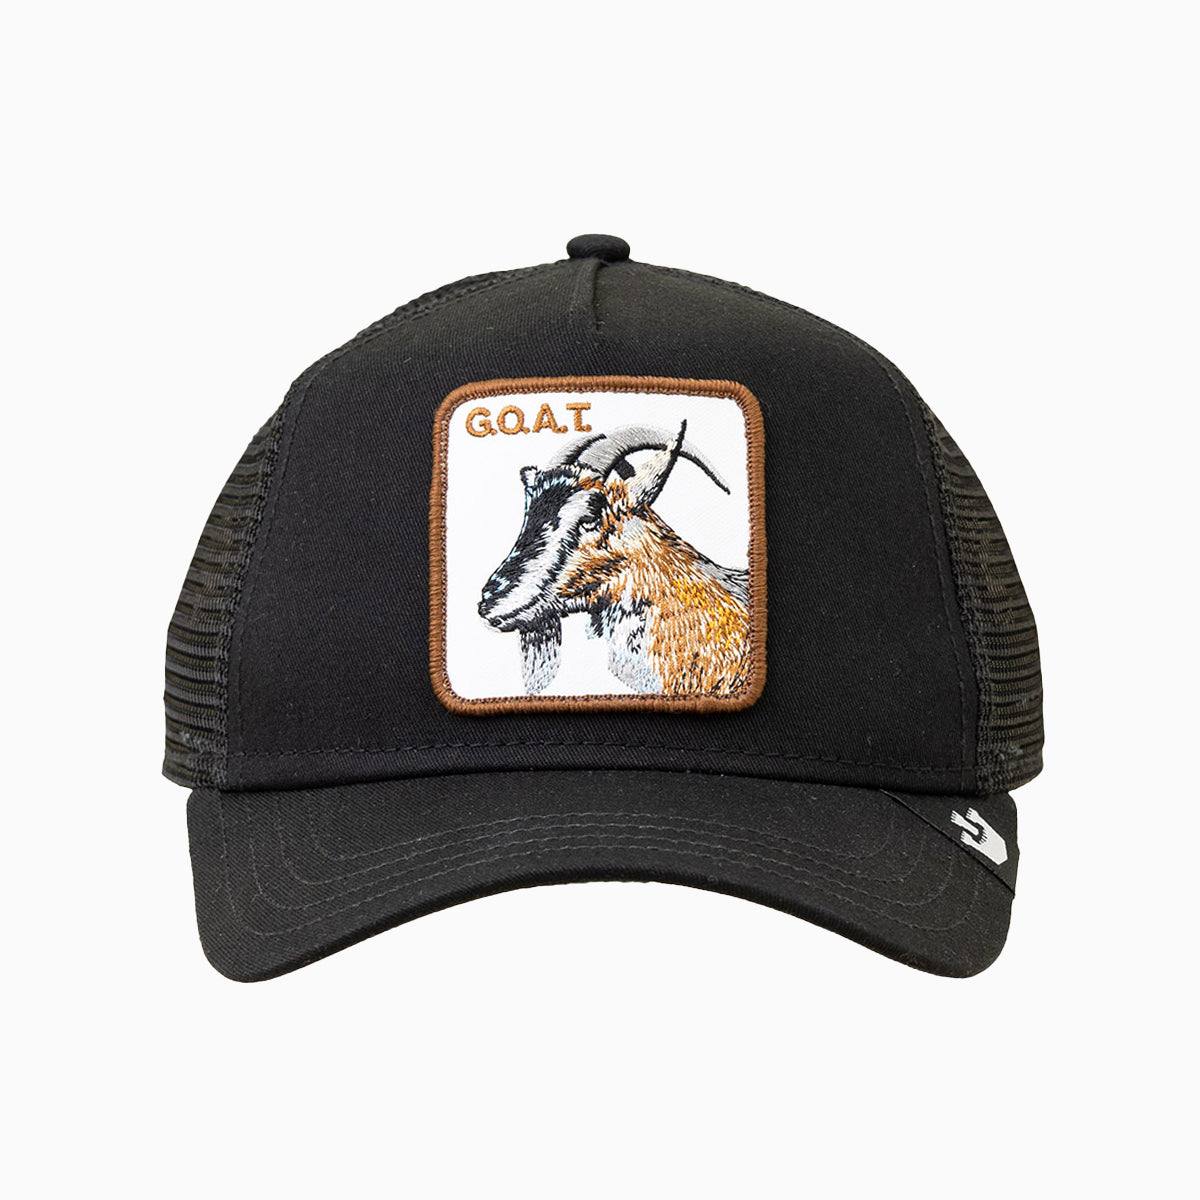 The Goat Trucker Hat